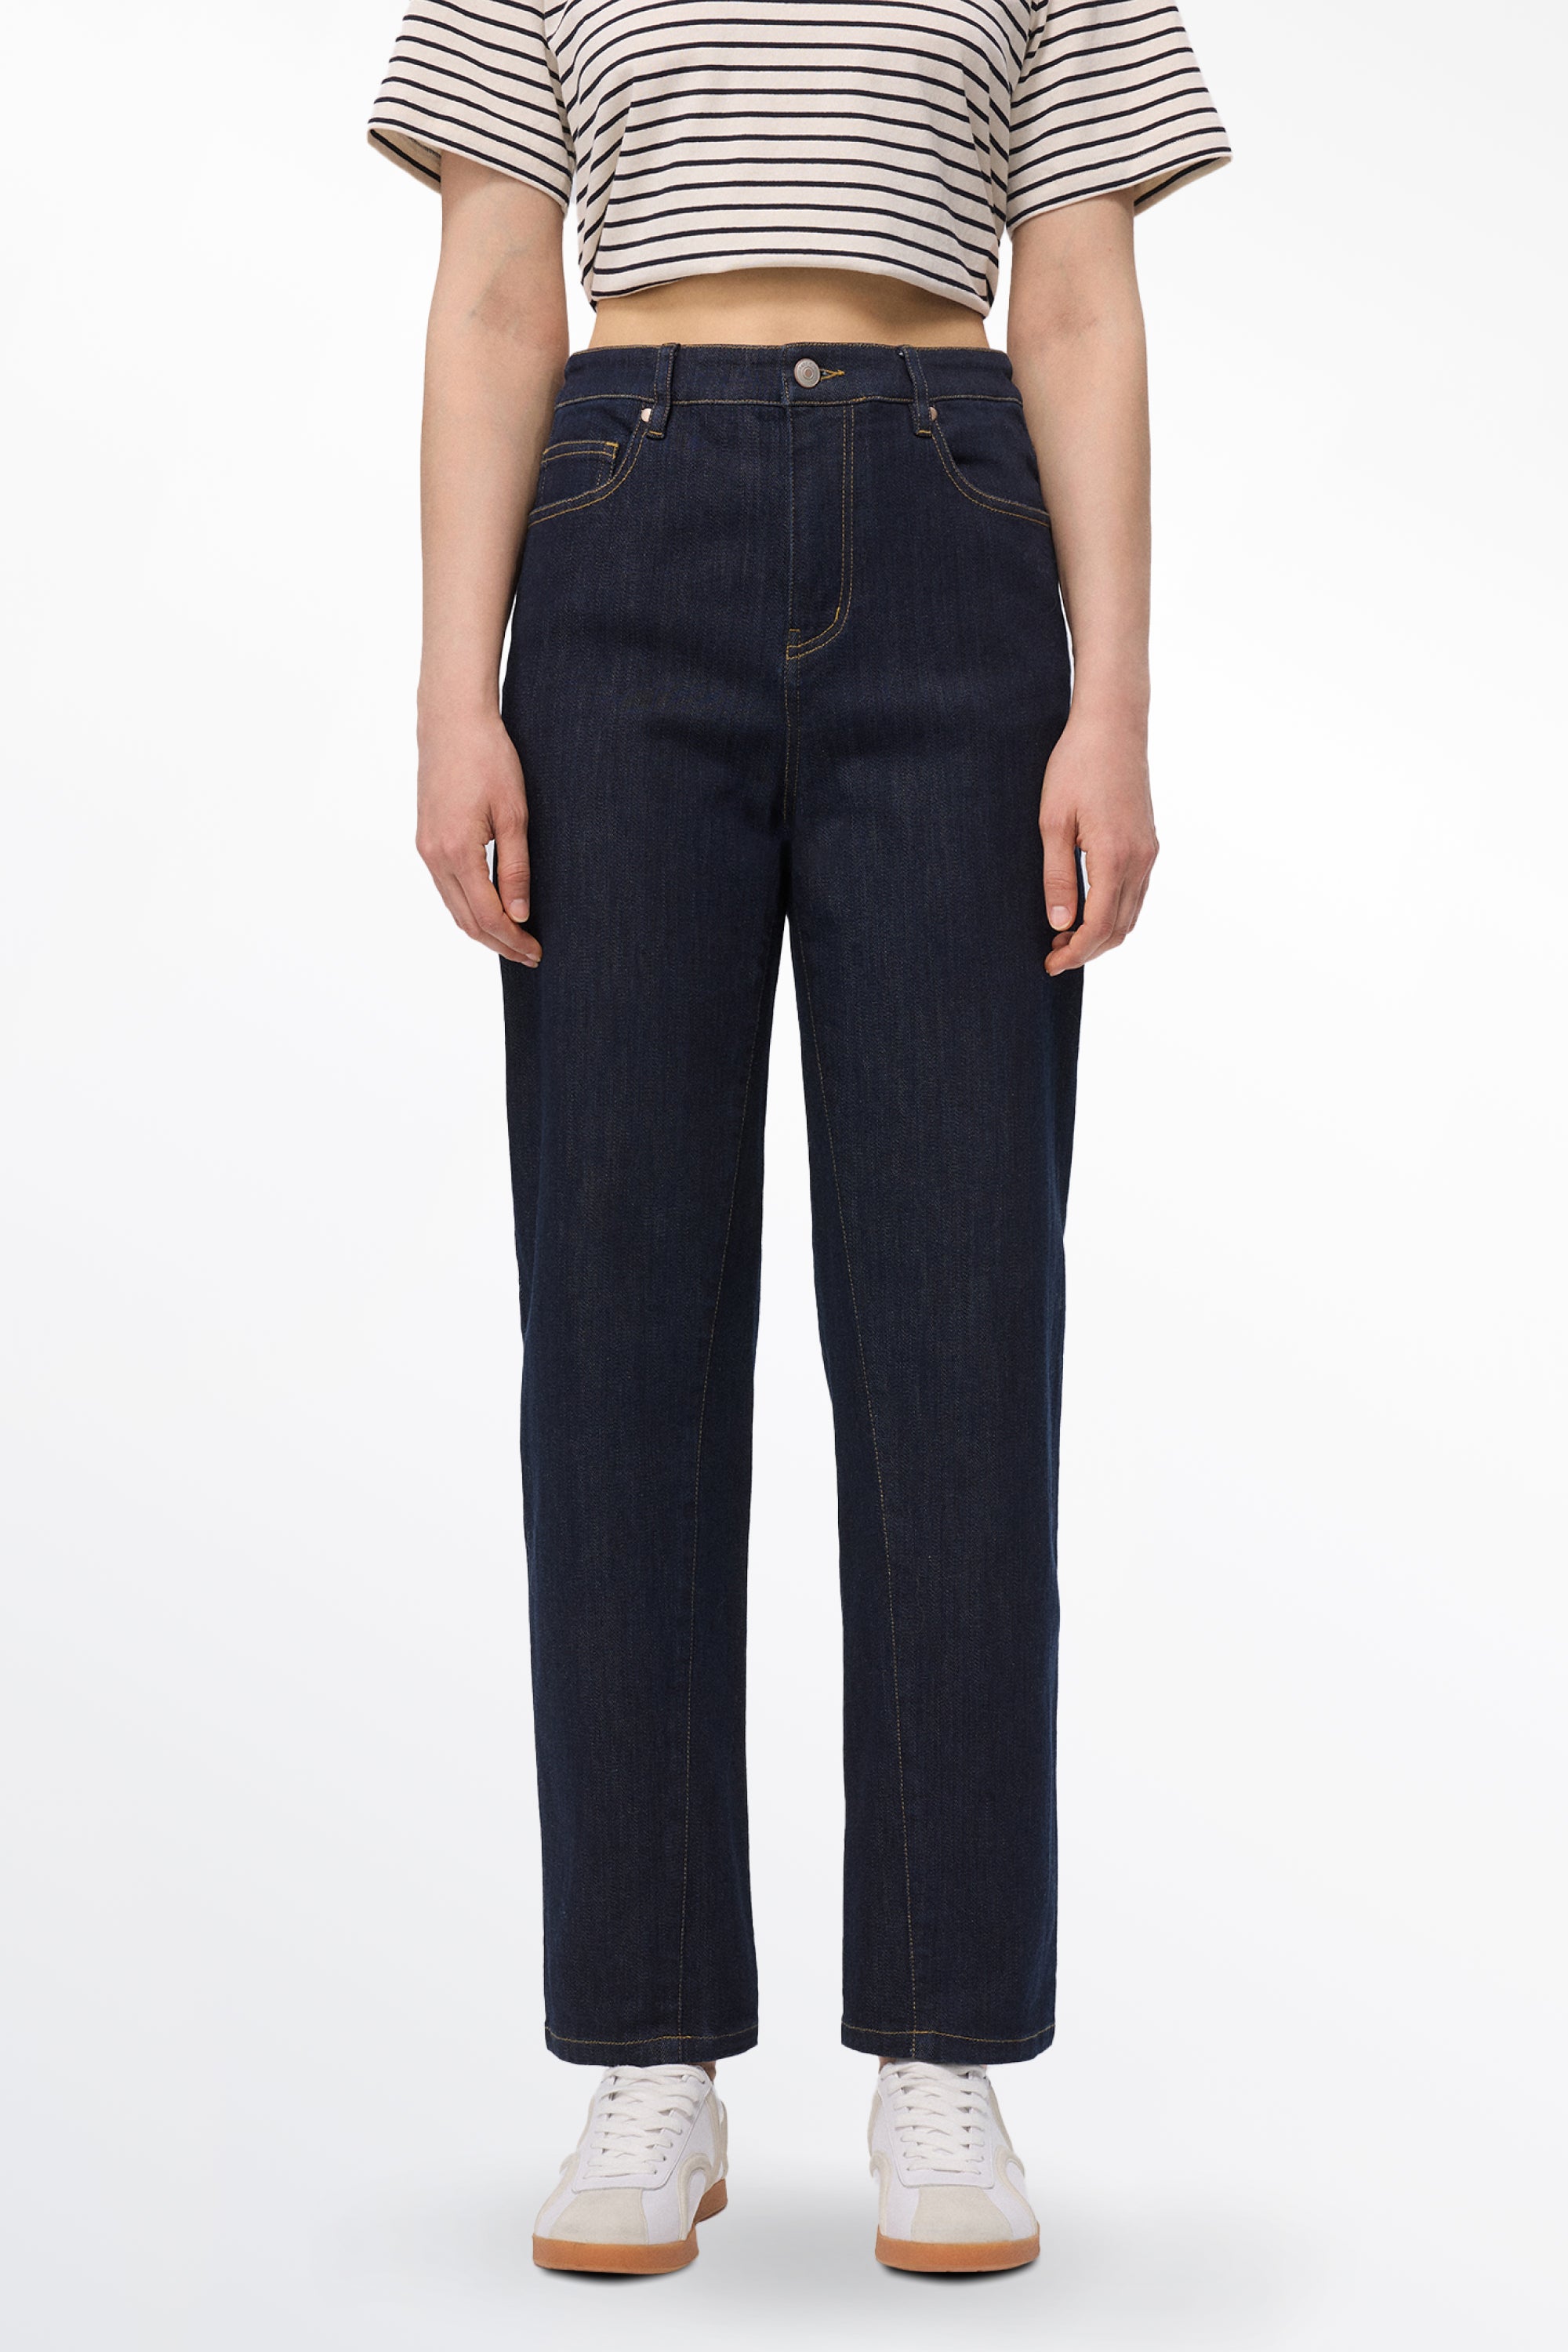 Jessica Vintage Tapered Jeans in Cotton Denim